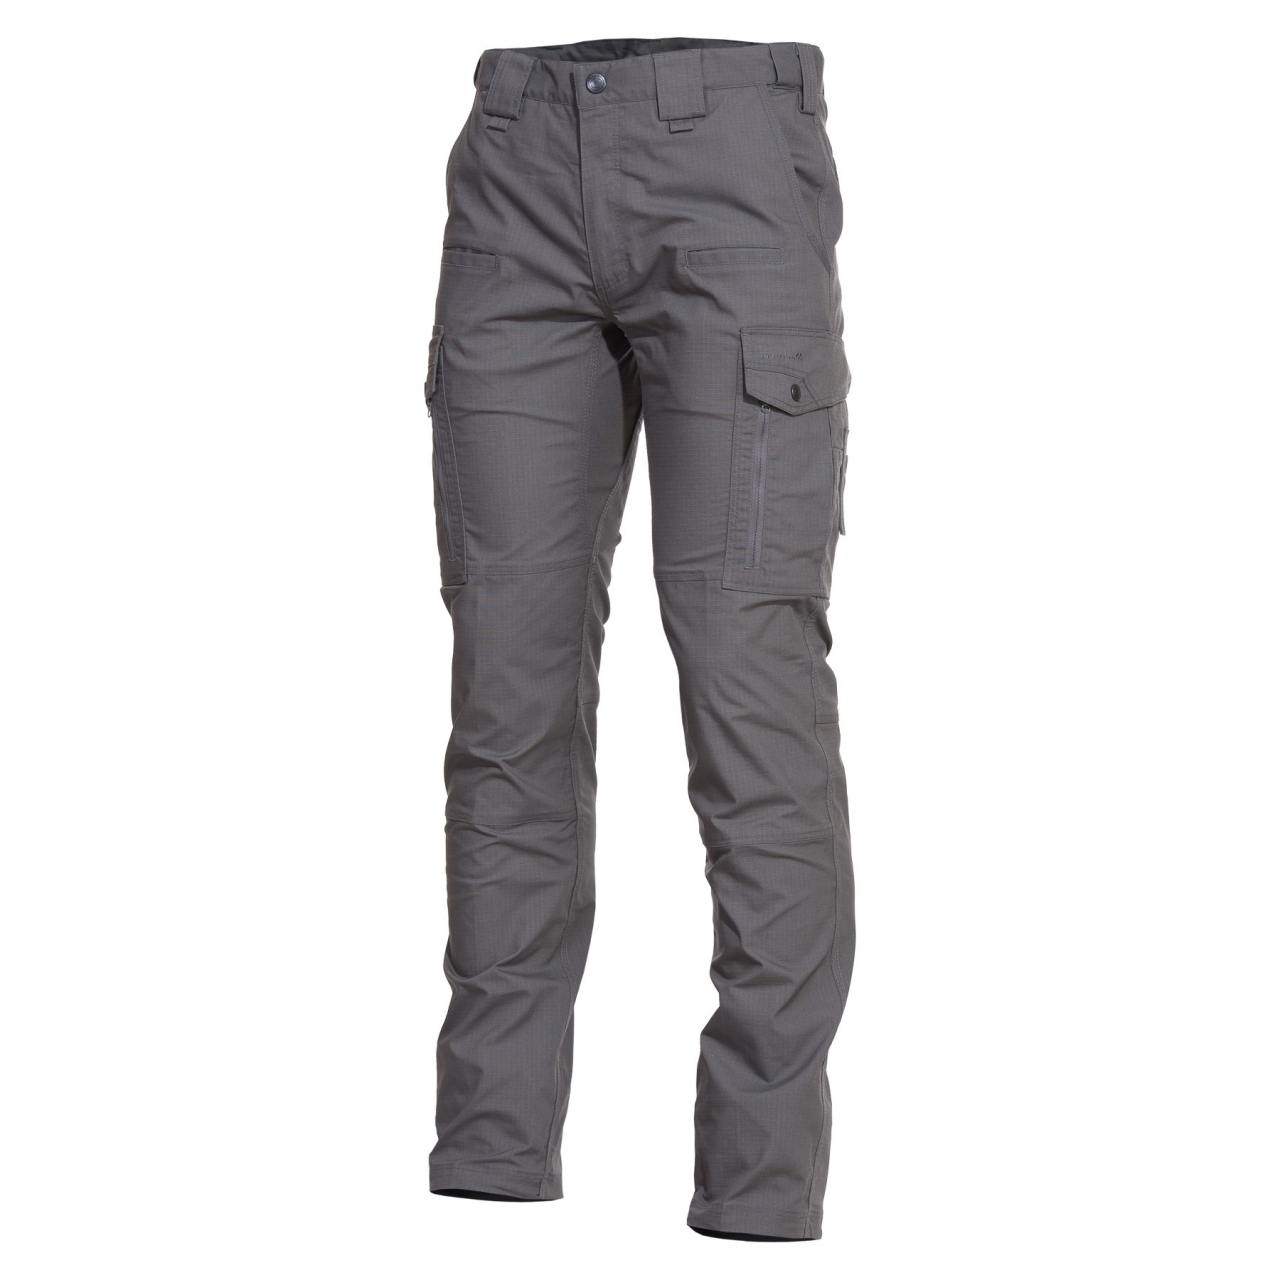 Kalhoty Pentagon Ranger 2.0 - šedé, 50 L